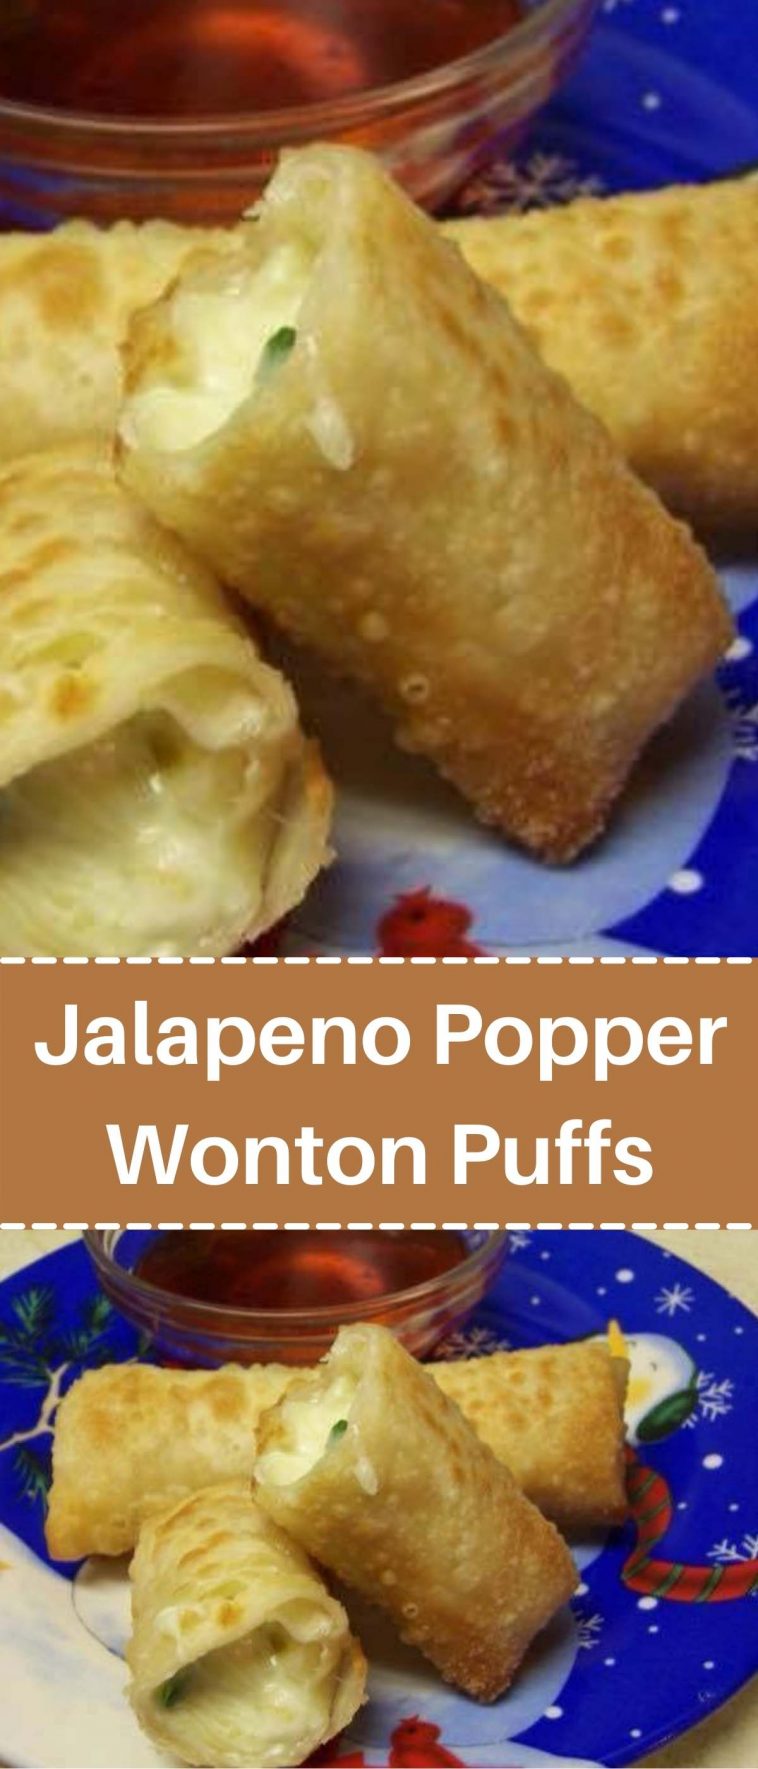 Jalapeno Popper Wonton Puffs